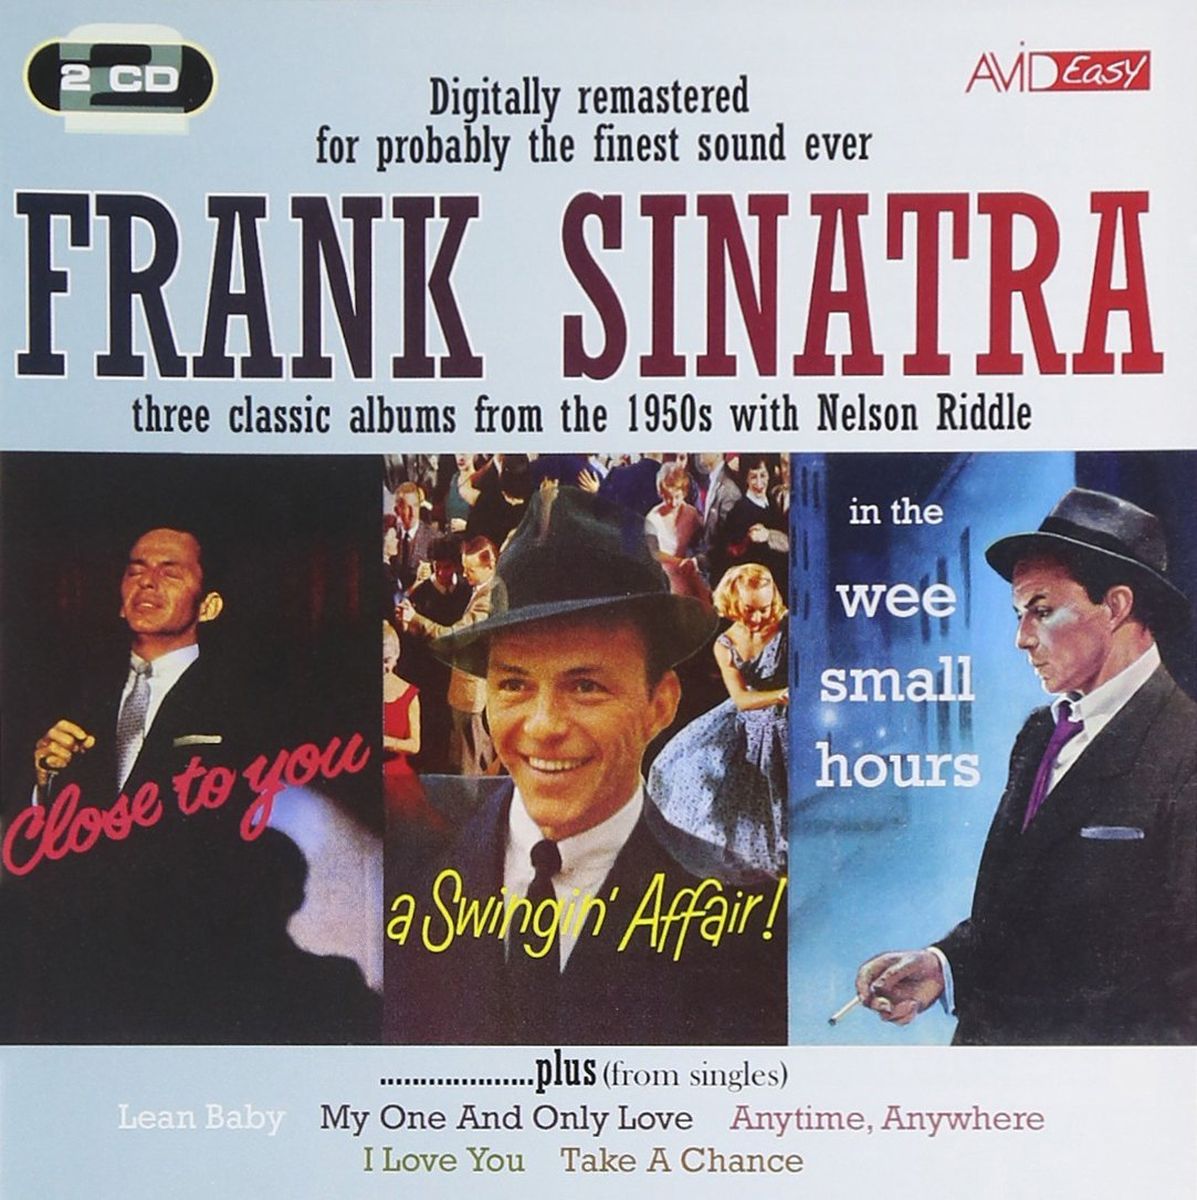 Small hours. Frank Sinatra album. Frank Sinatra in the Wee small hours. 3 Frank Sinatra photo. Swingin' with Sinatra.